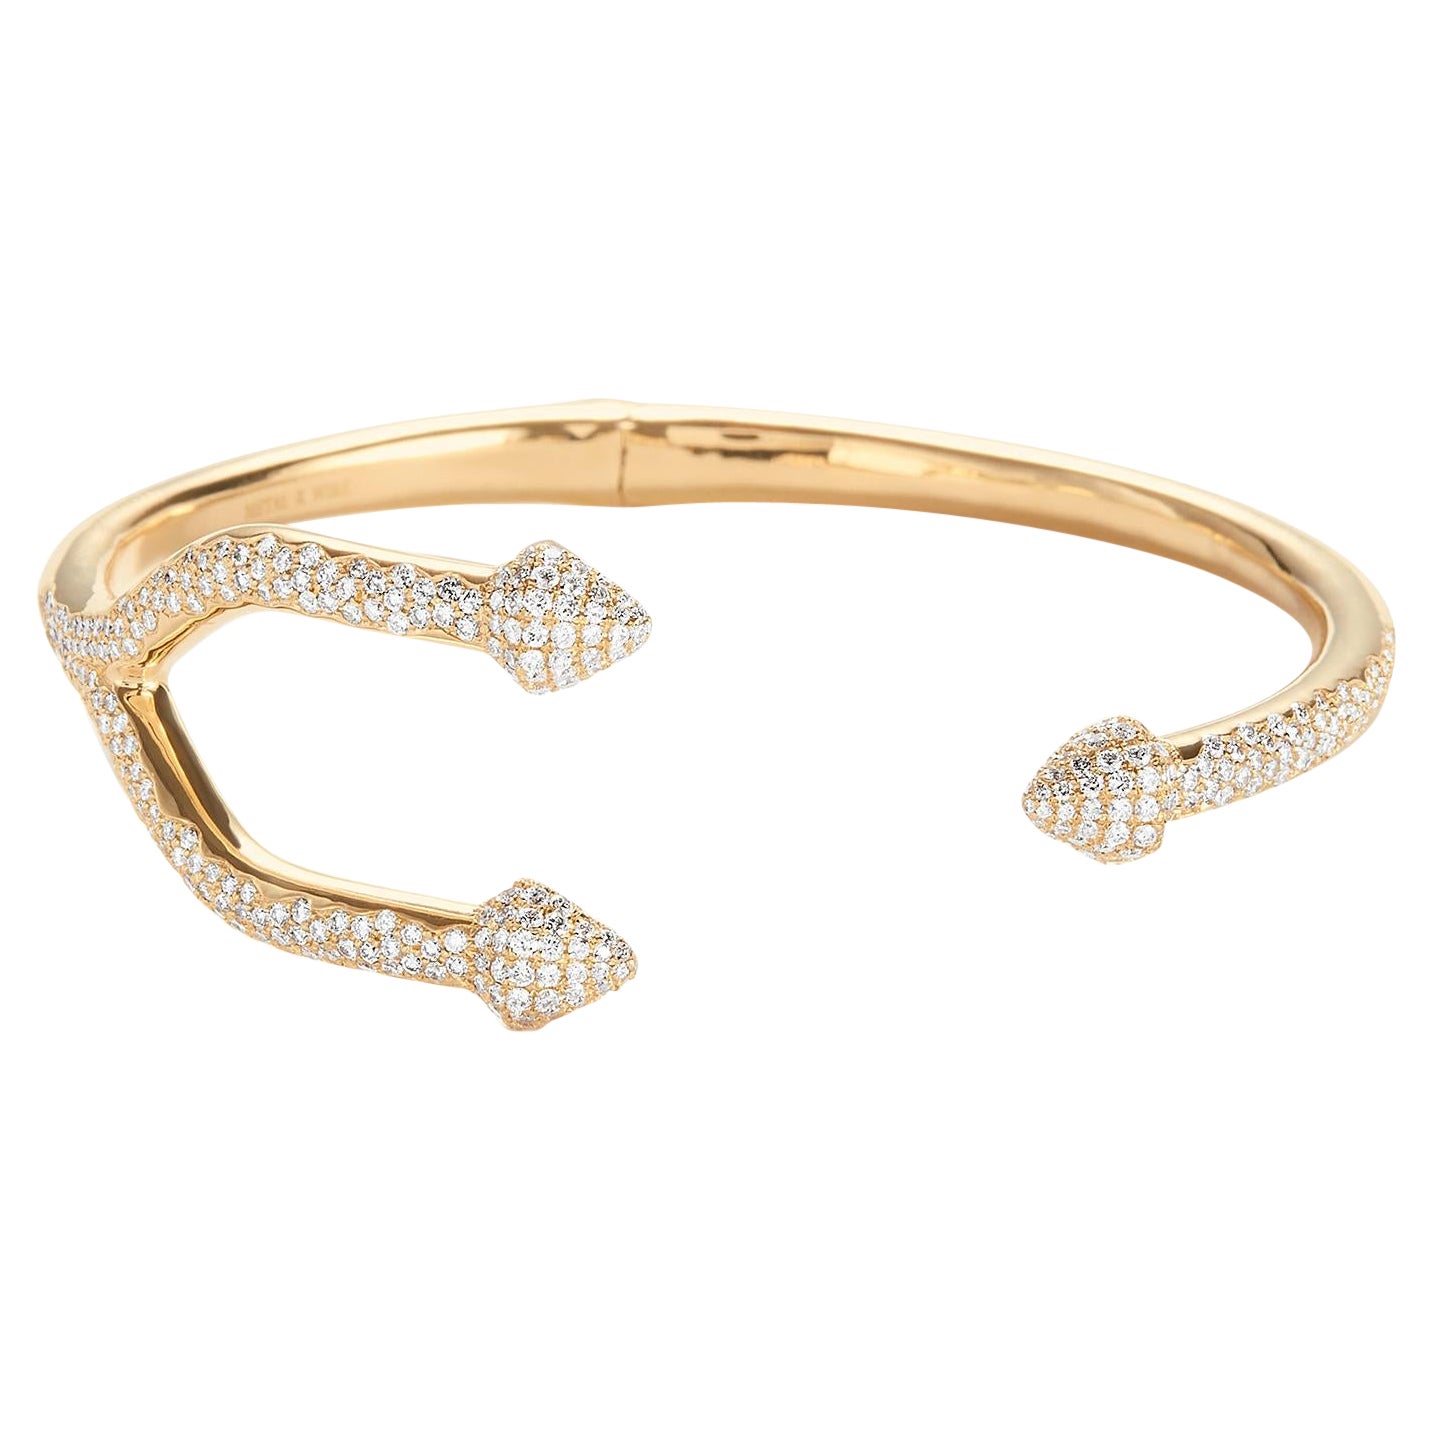 Metall x Draht 'Legacy Diamond Armreif' aus 18kt Gelbgold mit 2,63 Karat Diamanten im Angebot